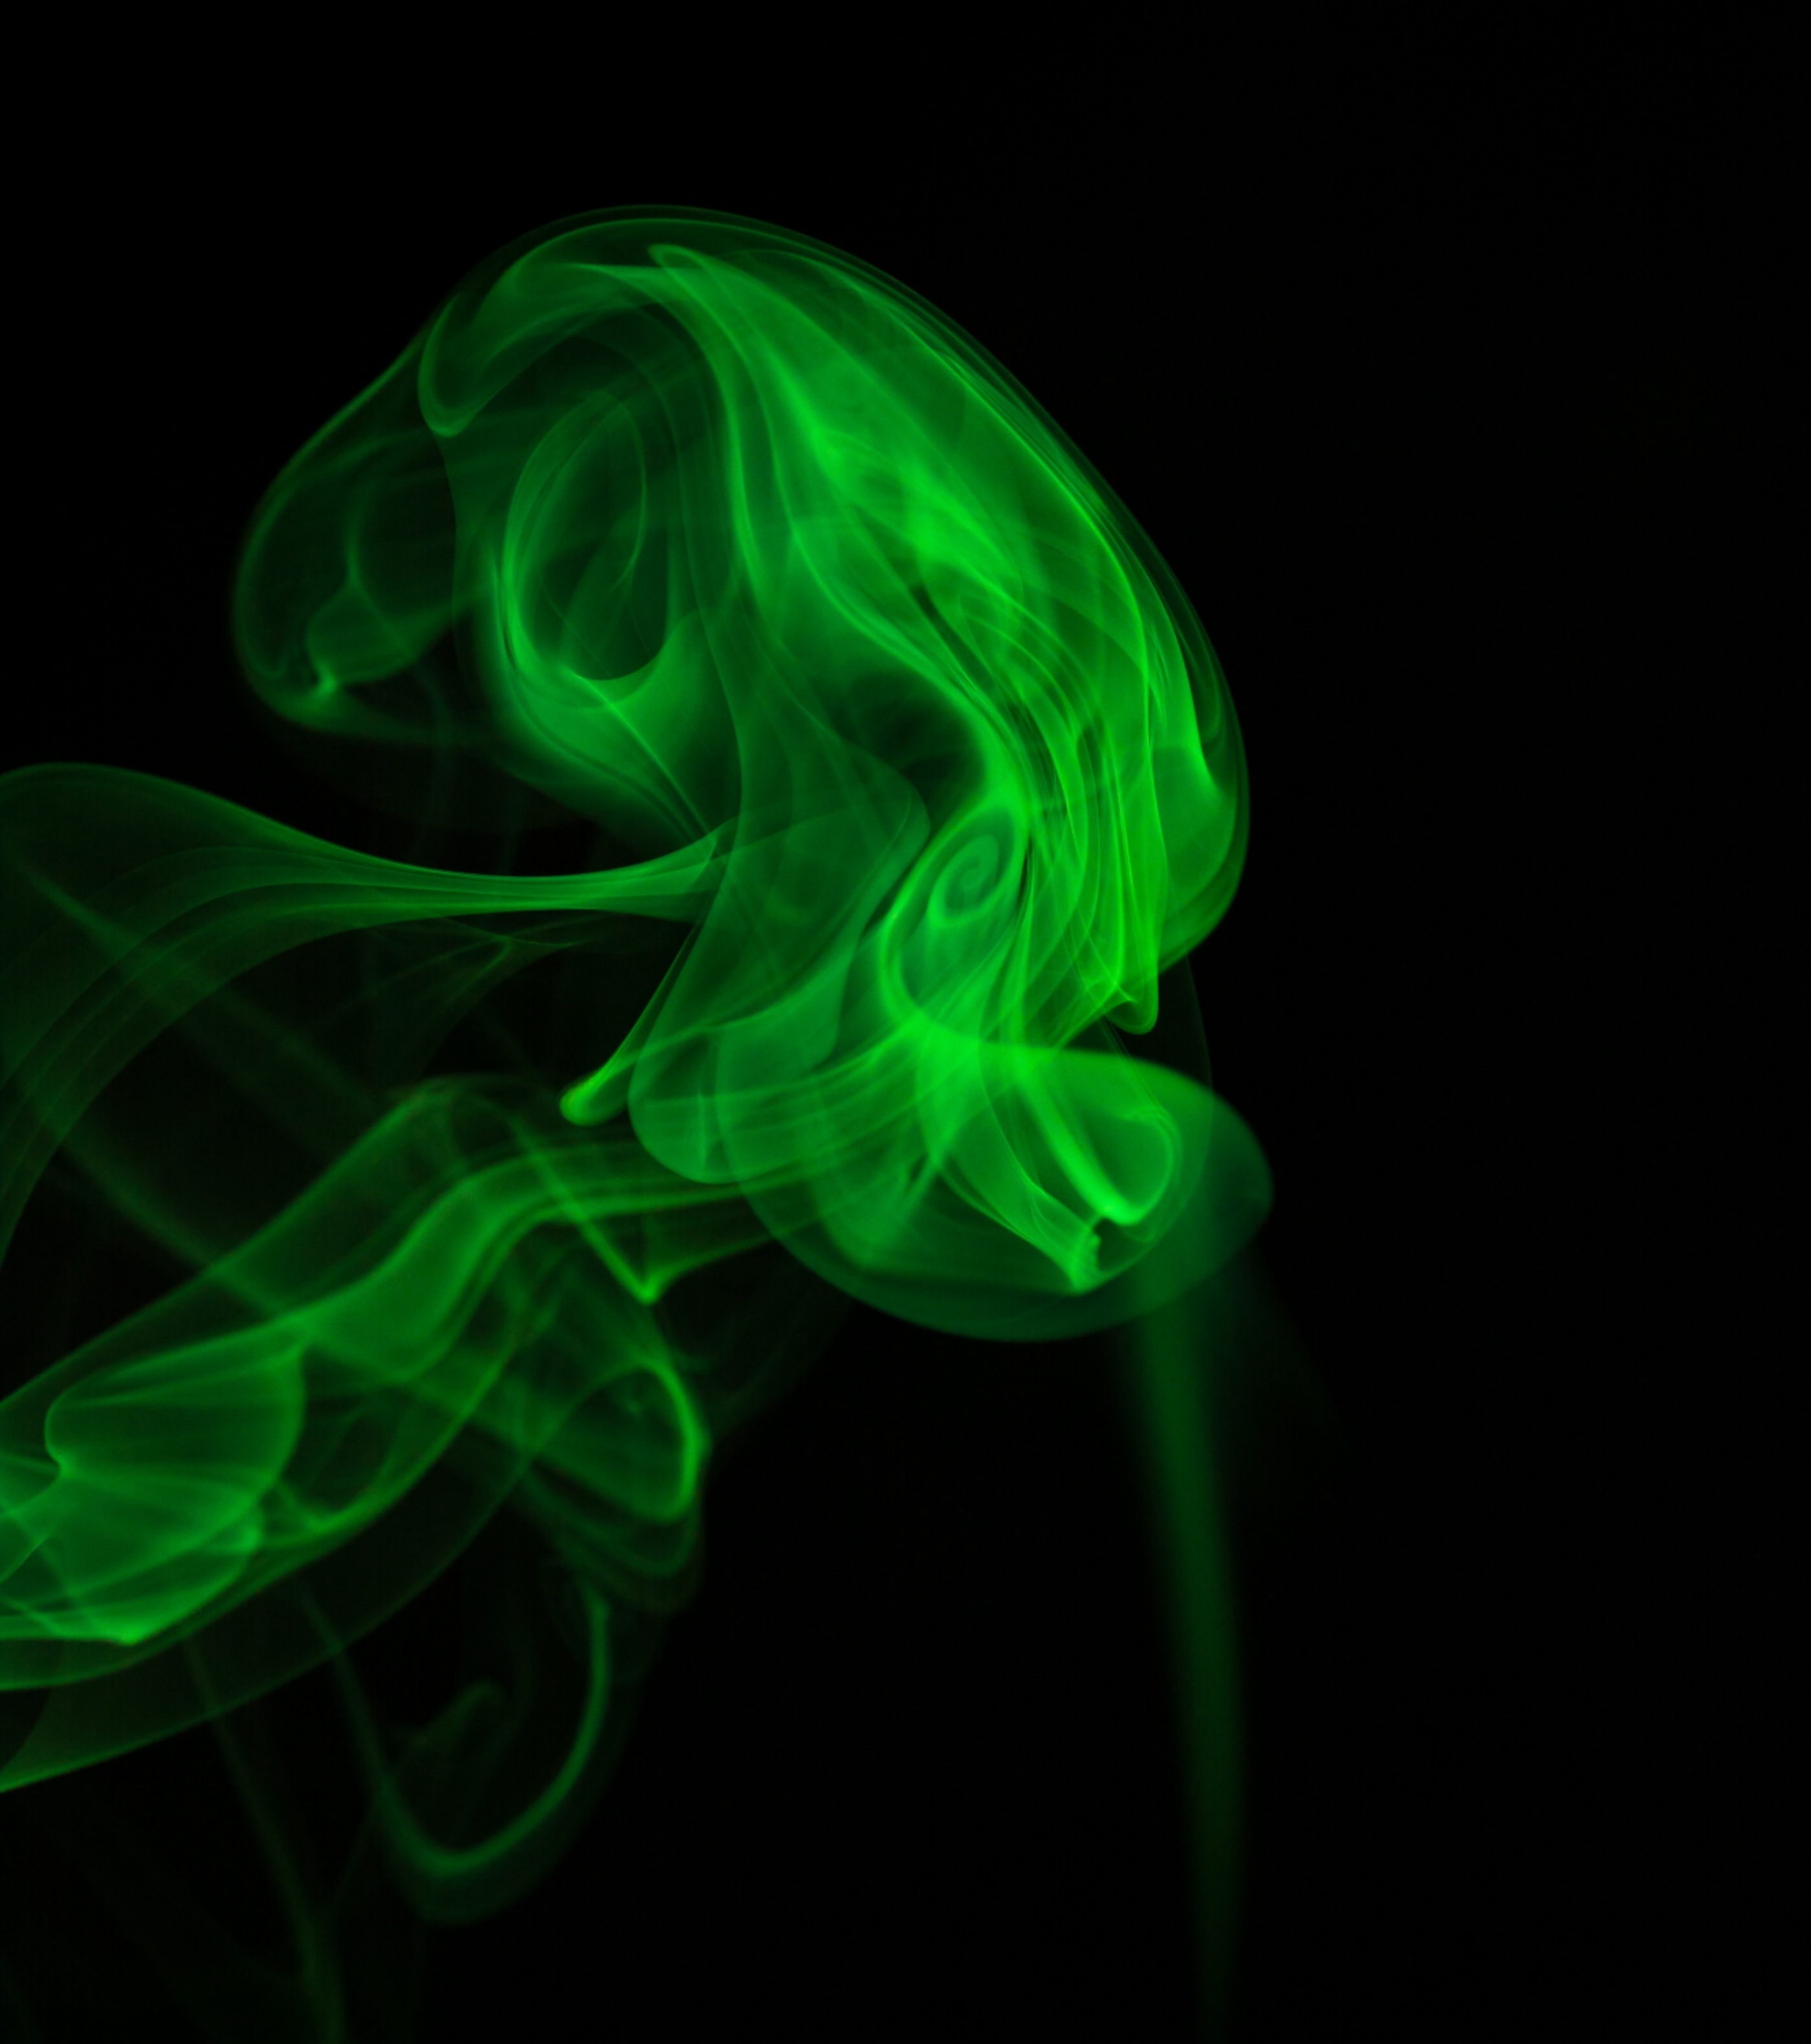 coloured smoke, green, abstract, smoke, colored smoke, clot